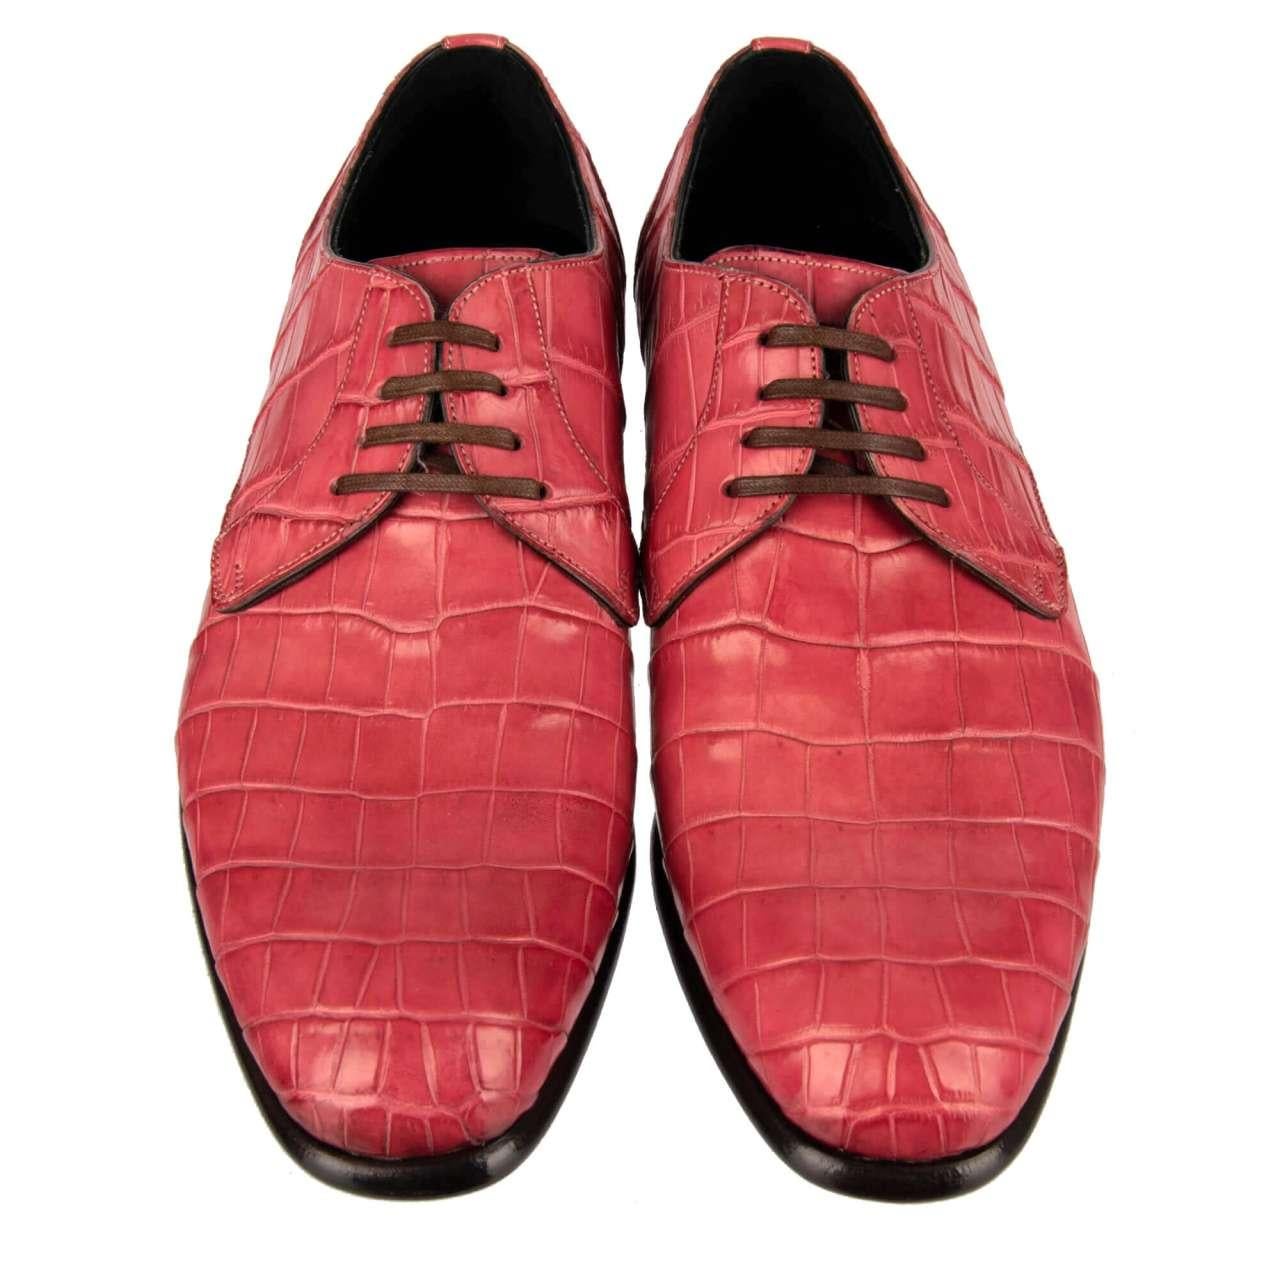 Dolce & Gabbana Crocodile Leather Derby Shoes SIENA Pink EUR 39 In Excellent Condition For Sale In Erkrath, DE